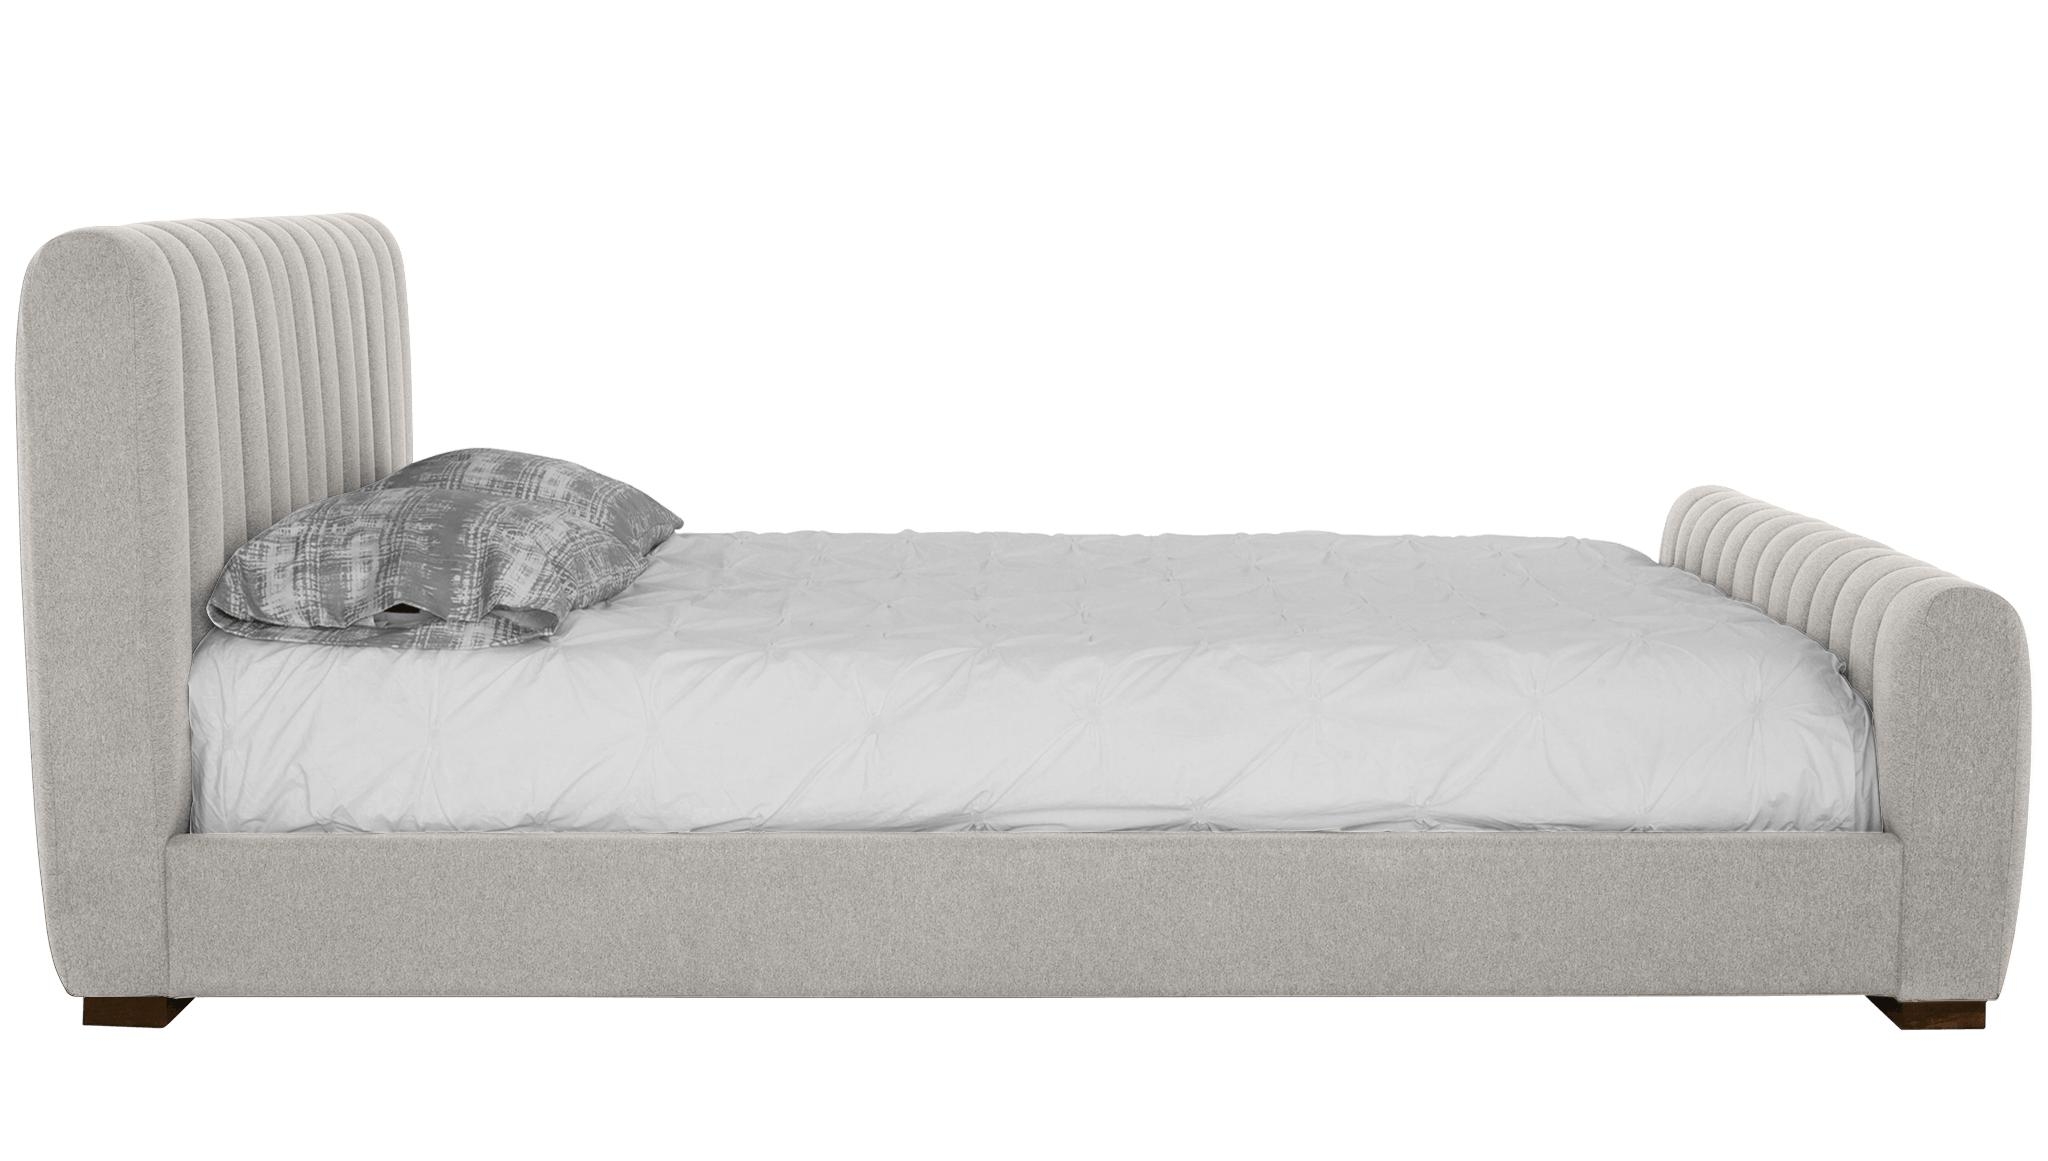 Beige/White Camille Mid Century Modern Bed - Merit Dove - Mocha - Queen - Image 2